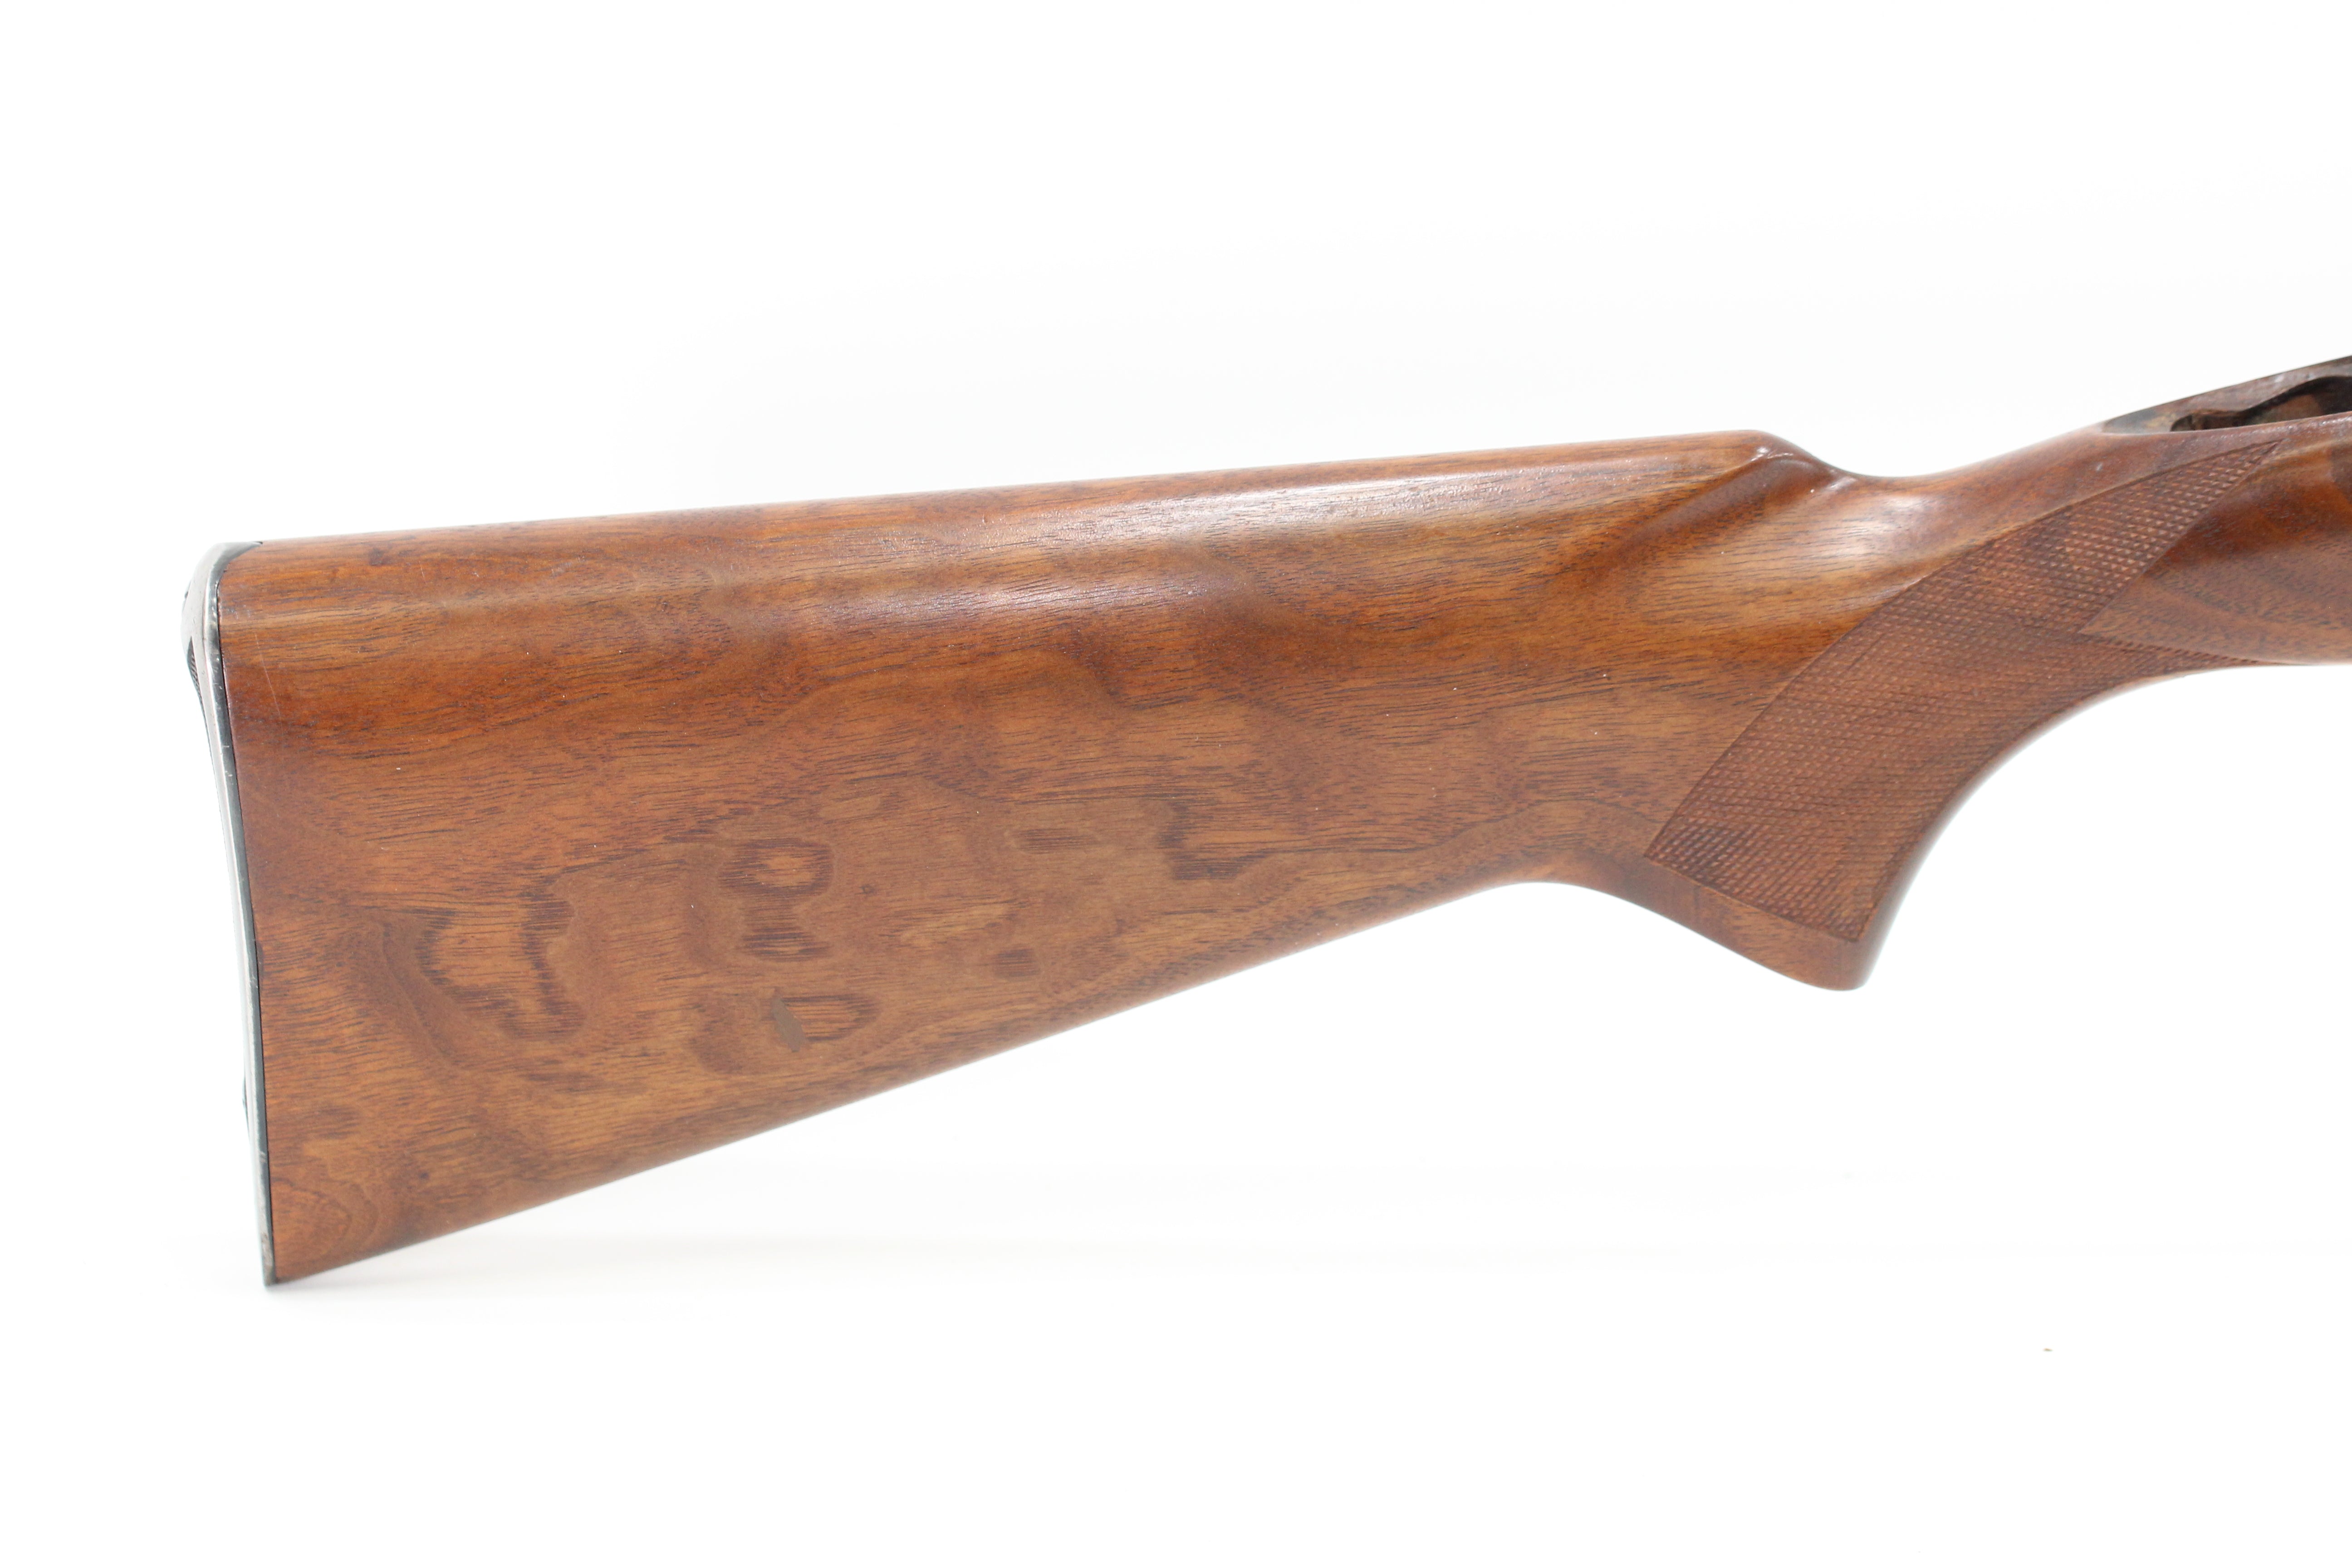 1950-1958 Low Comb Standard Rifle Stock - Borderless Checkering